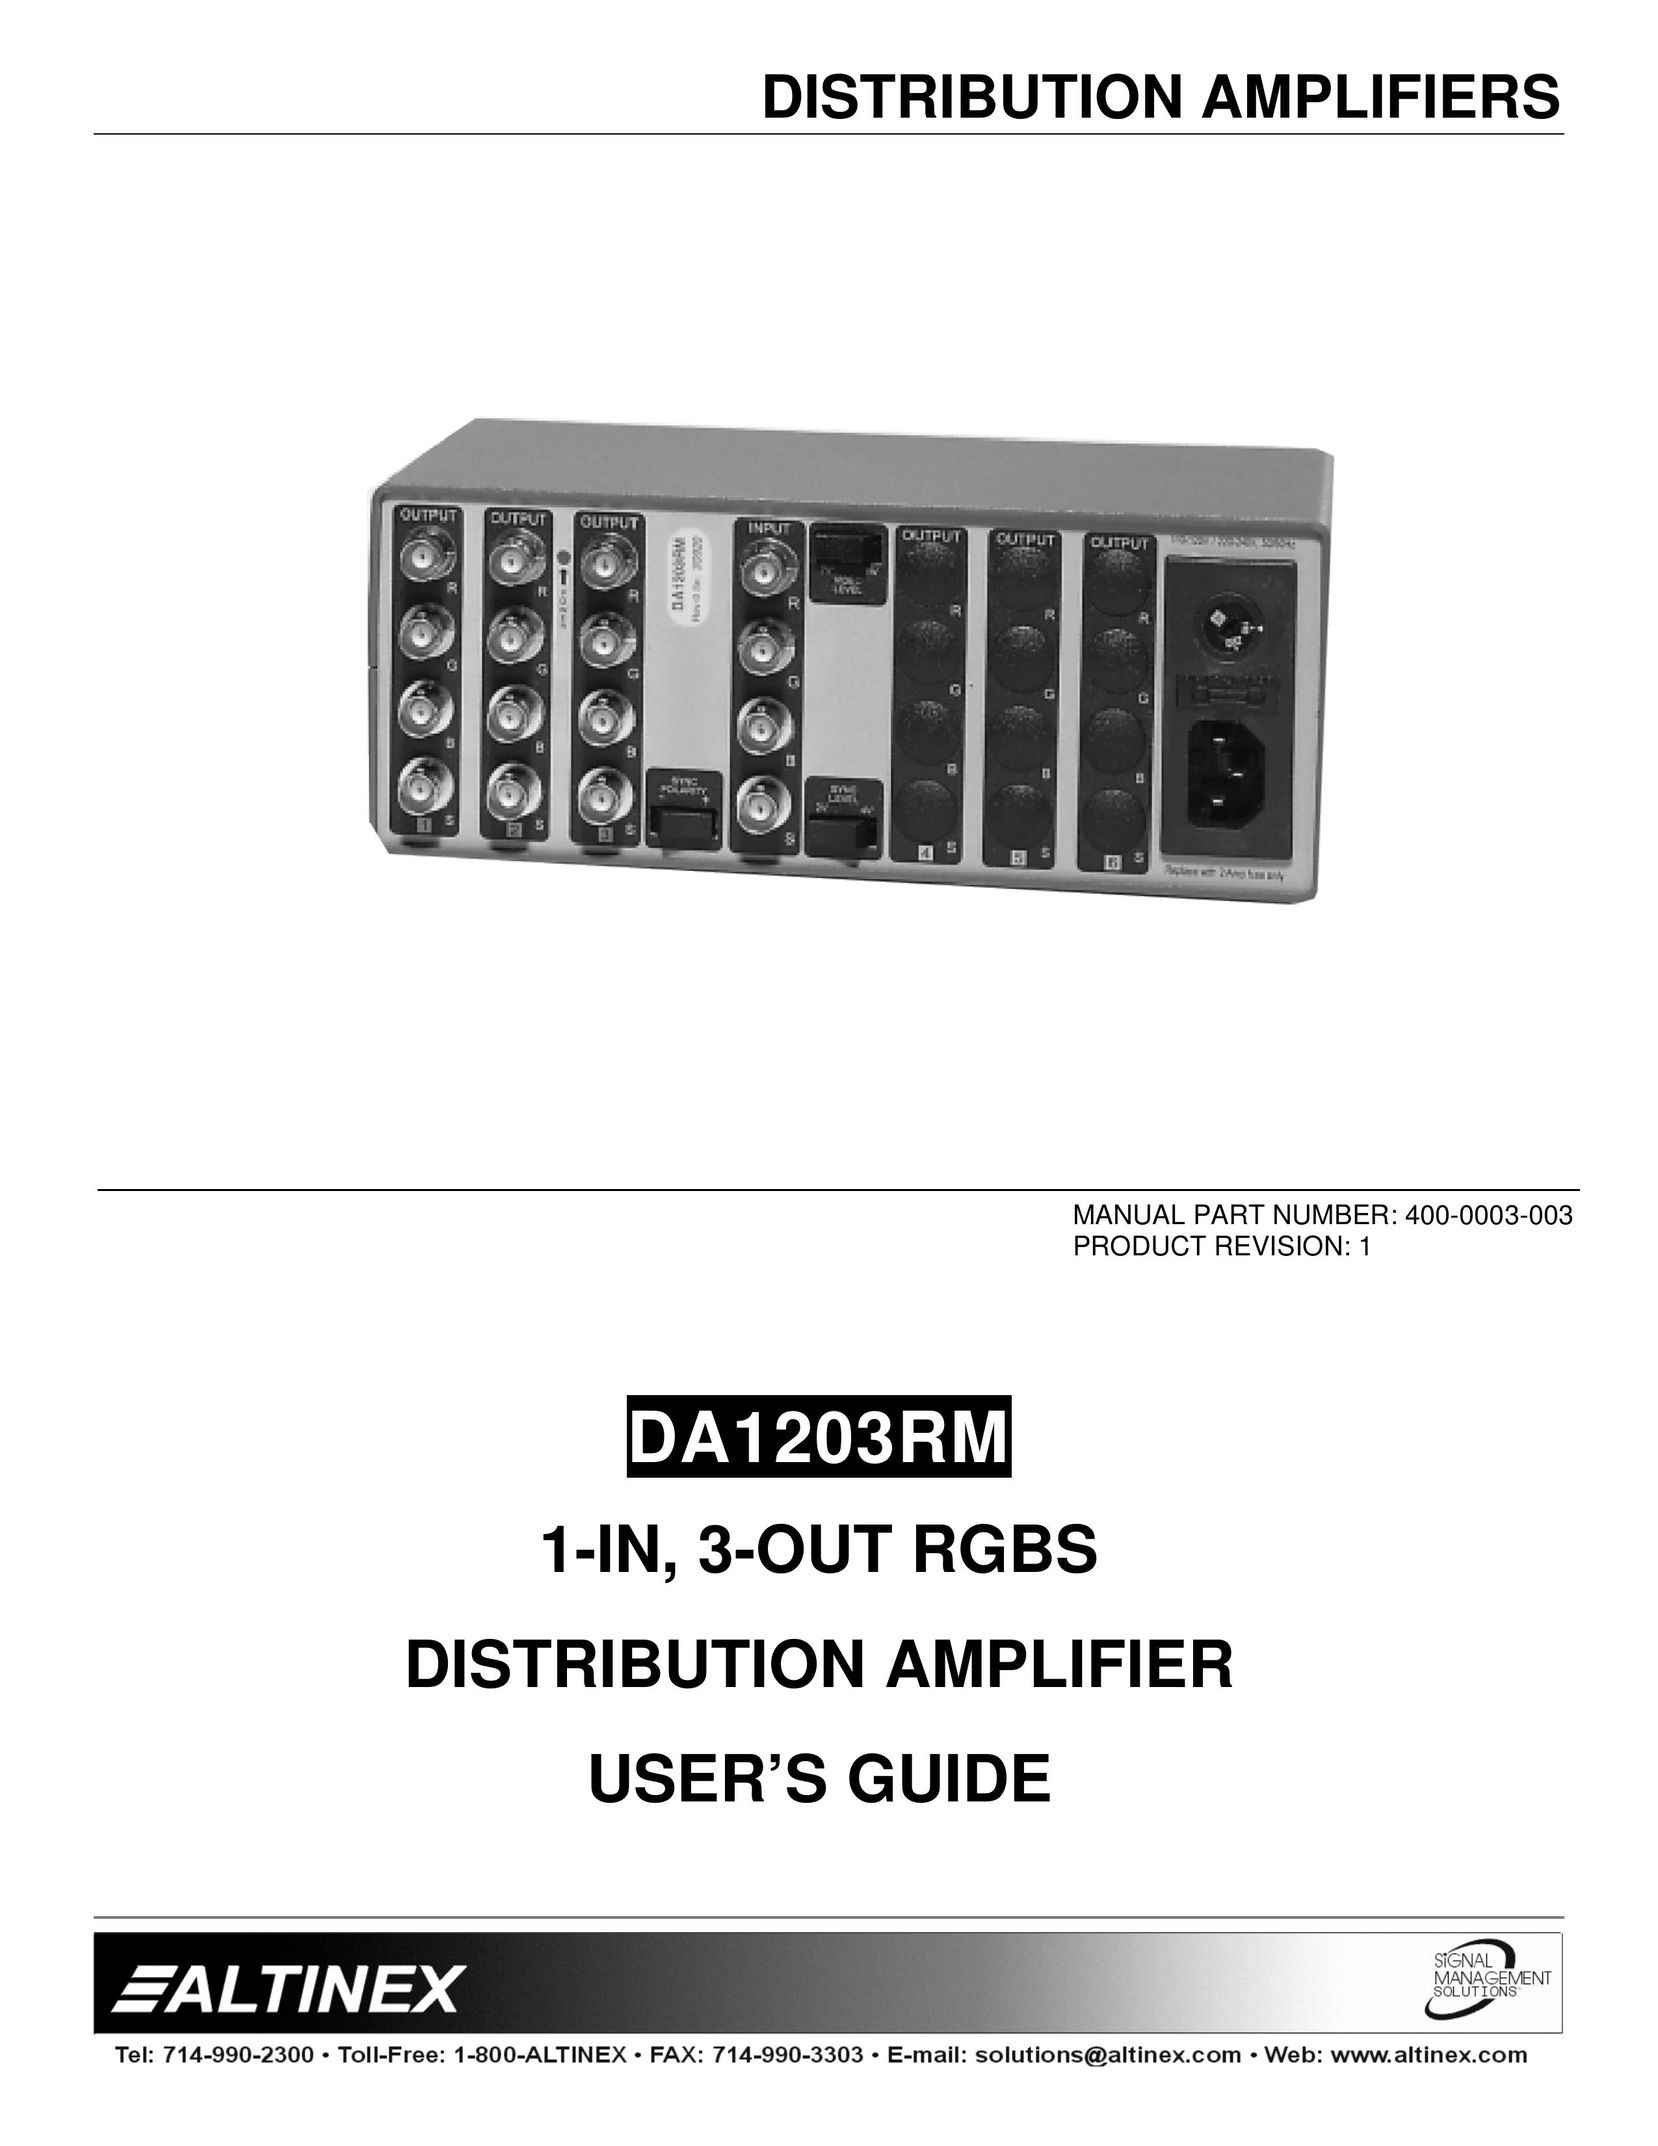 Altinex DA1203RM Stereo Amplifier User Manual